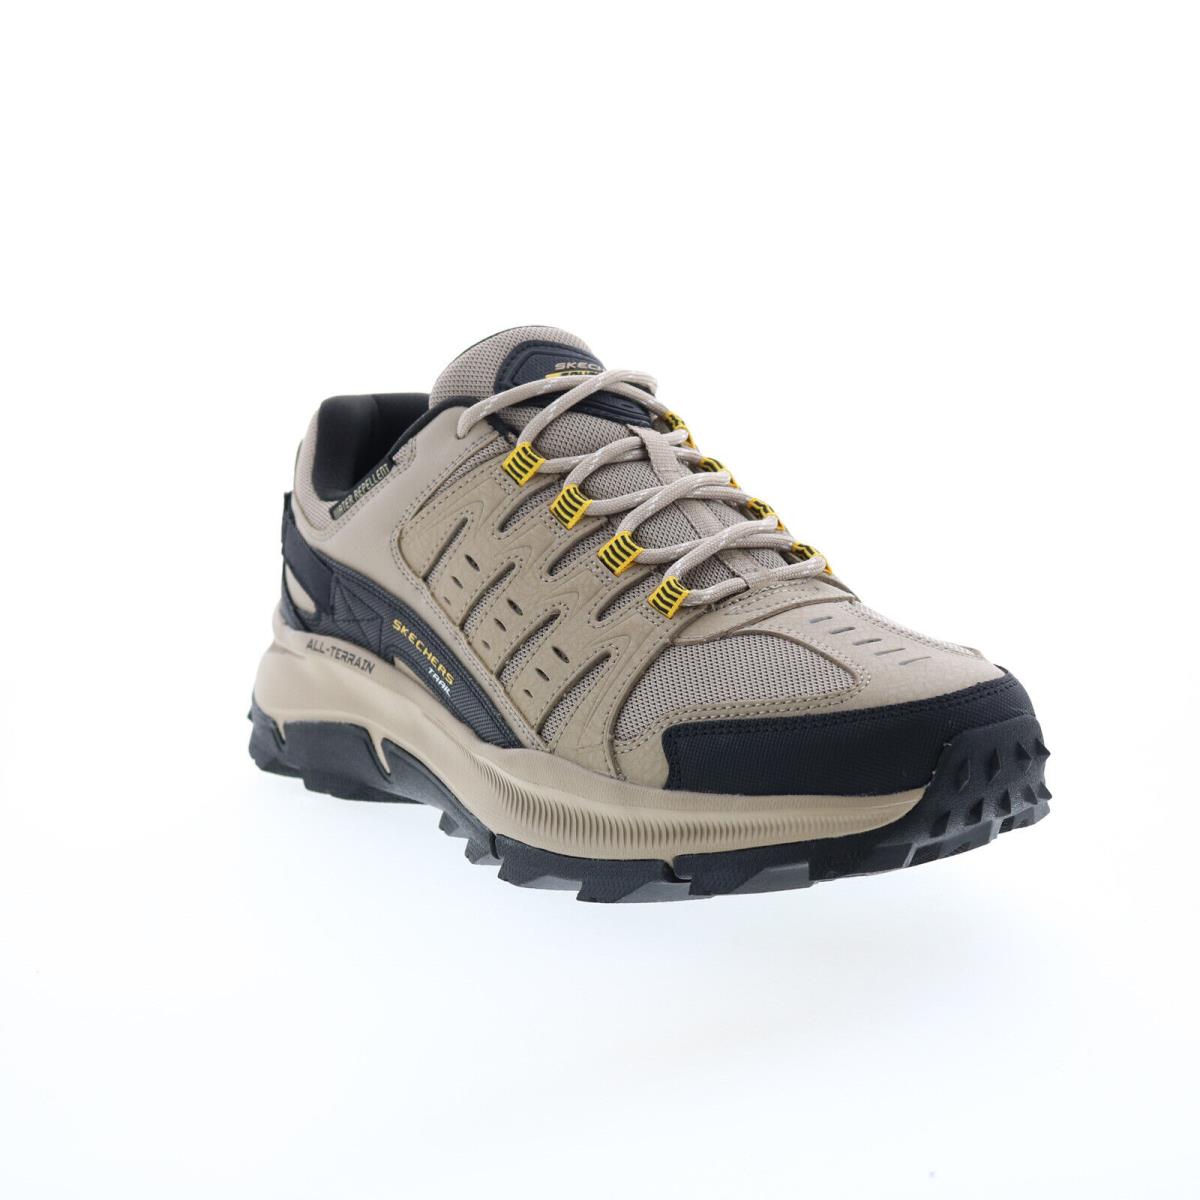 Skechers Equalizer 5.0 Trail Solix 237501 Mens Beige Athletic Hiking Shoes - Beige